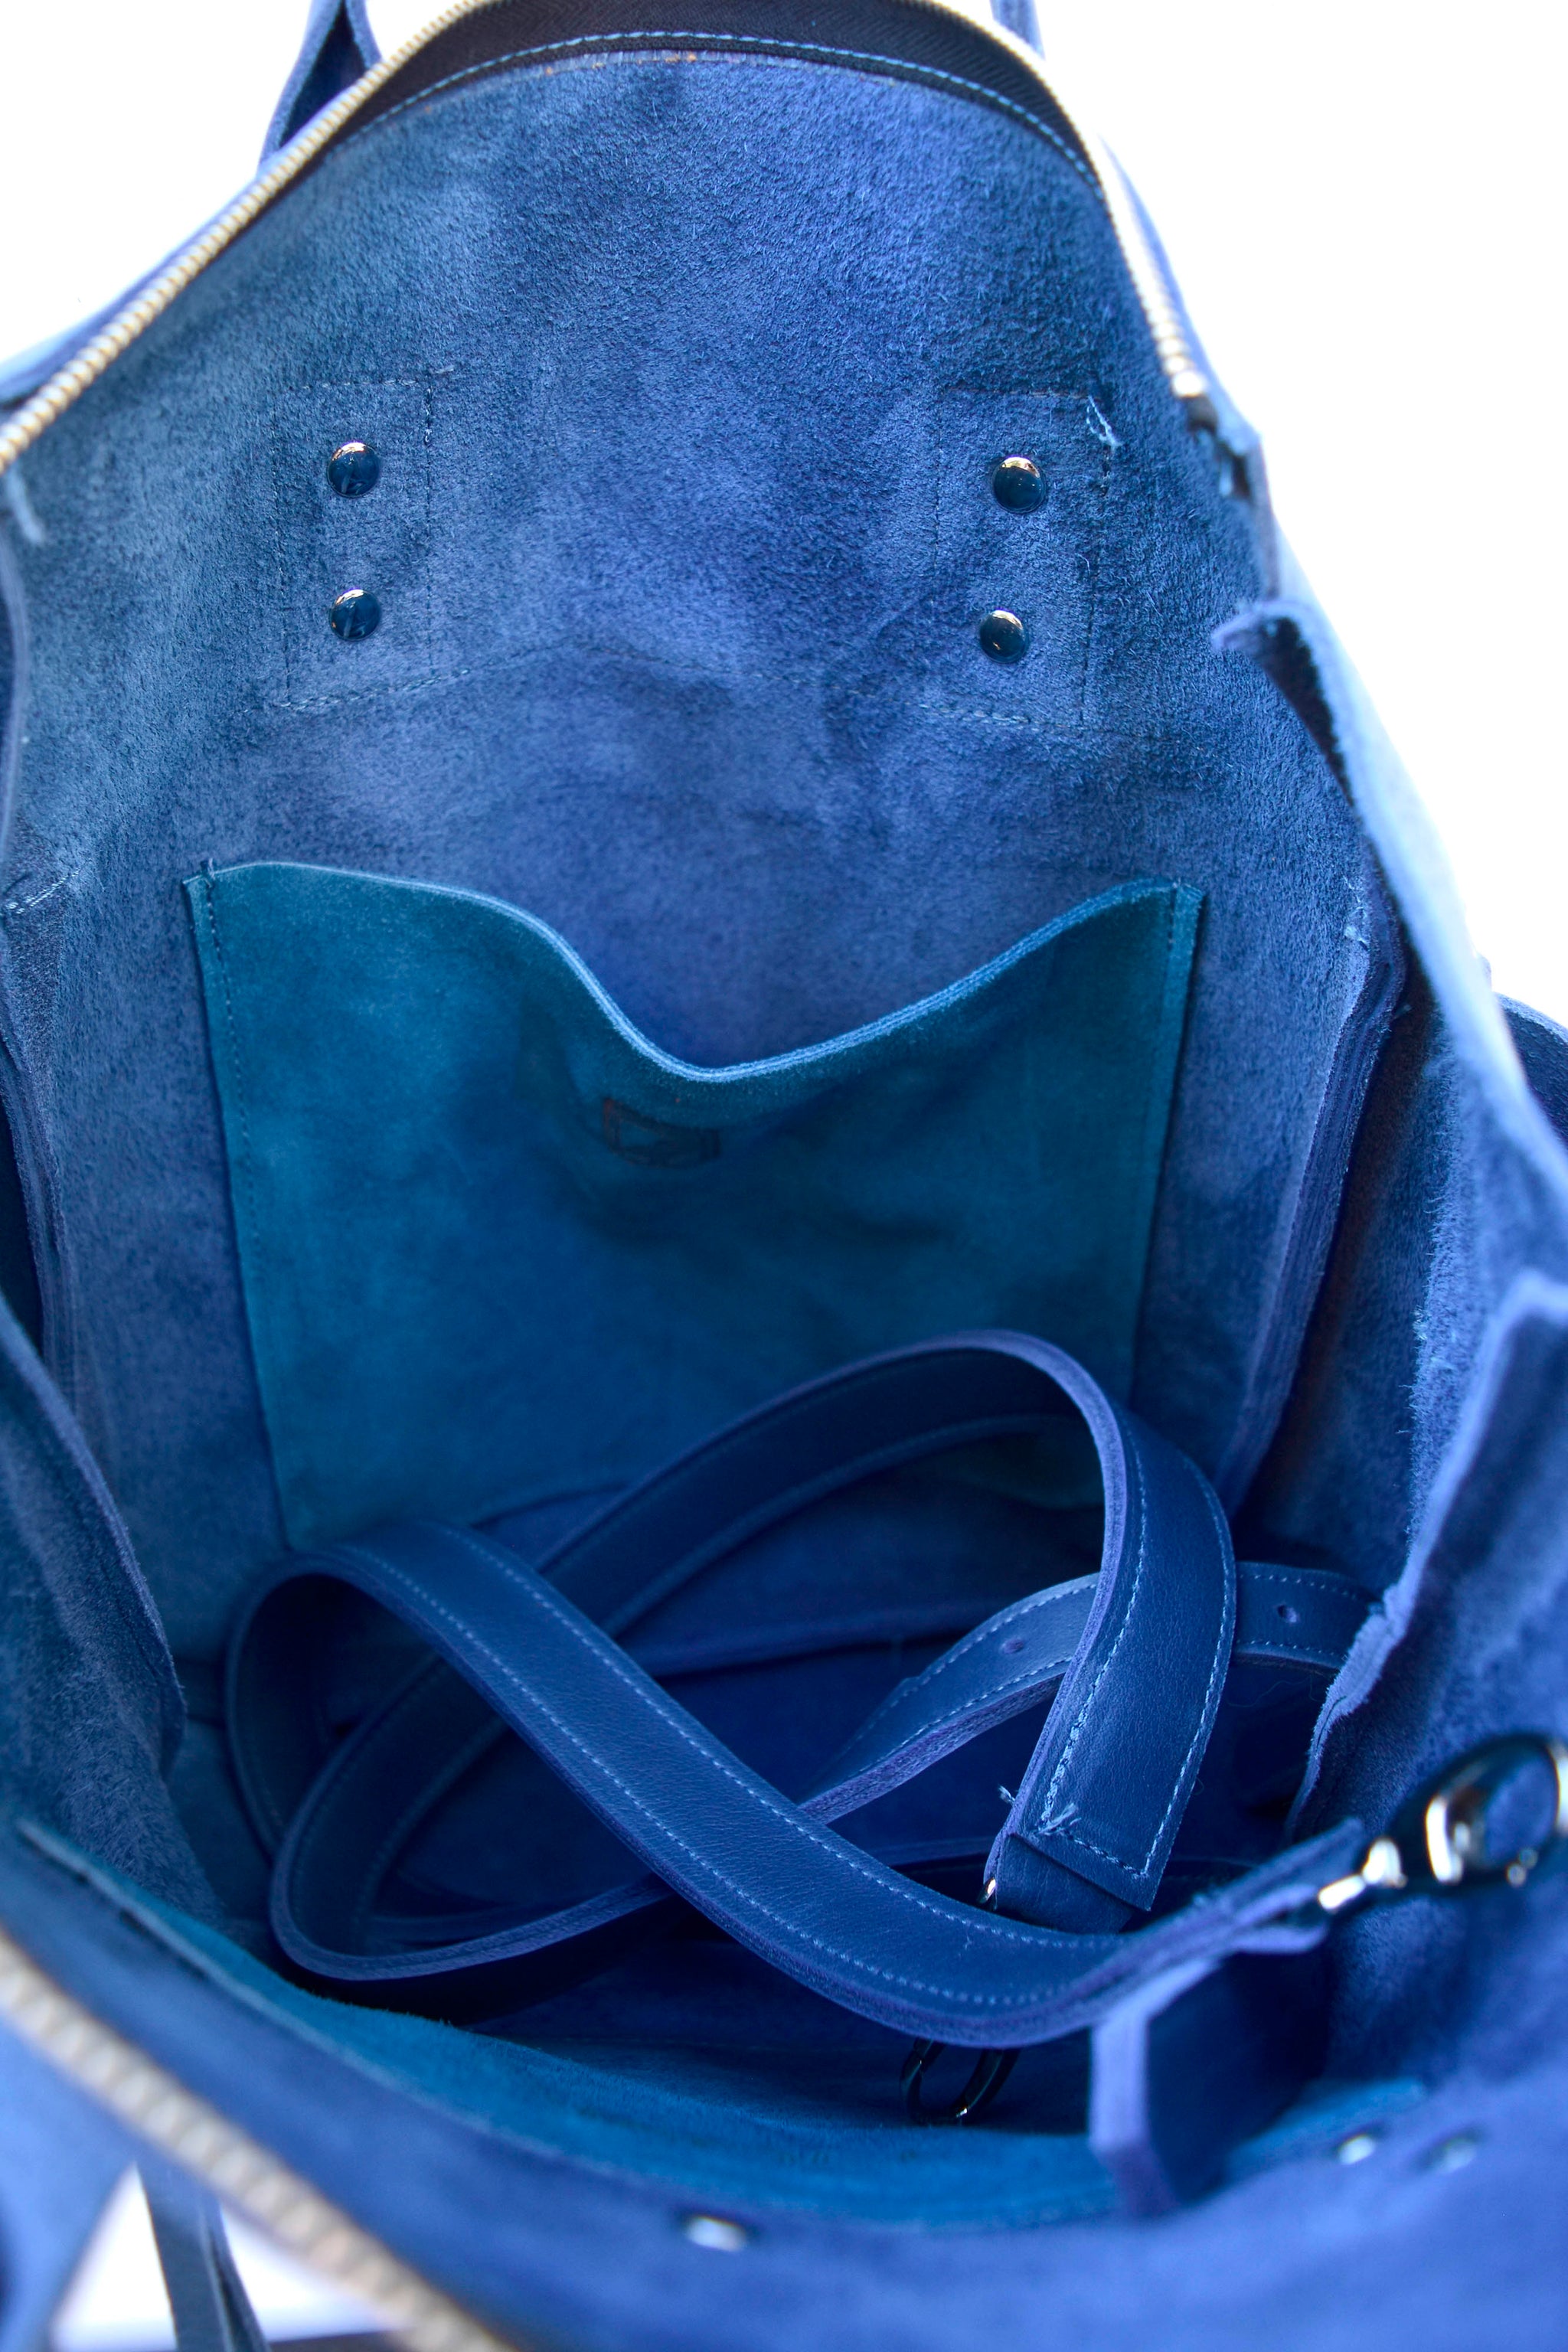 Hermes City backpack in Bleu indigo